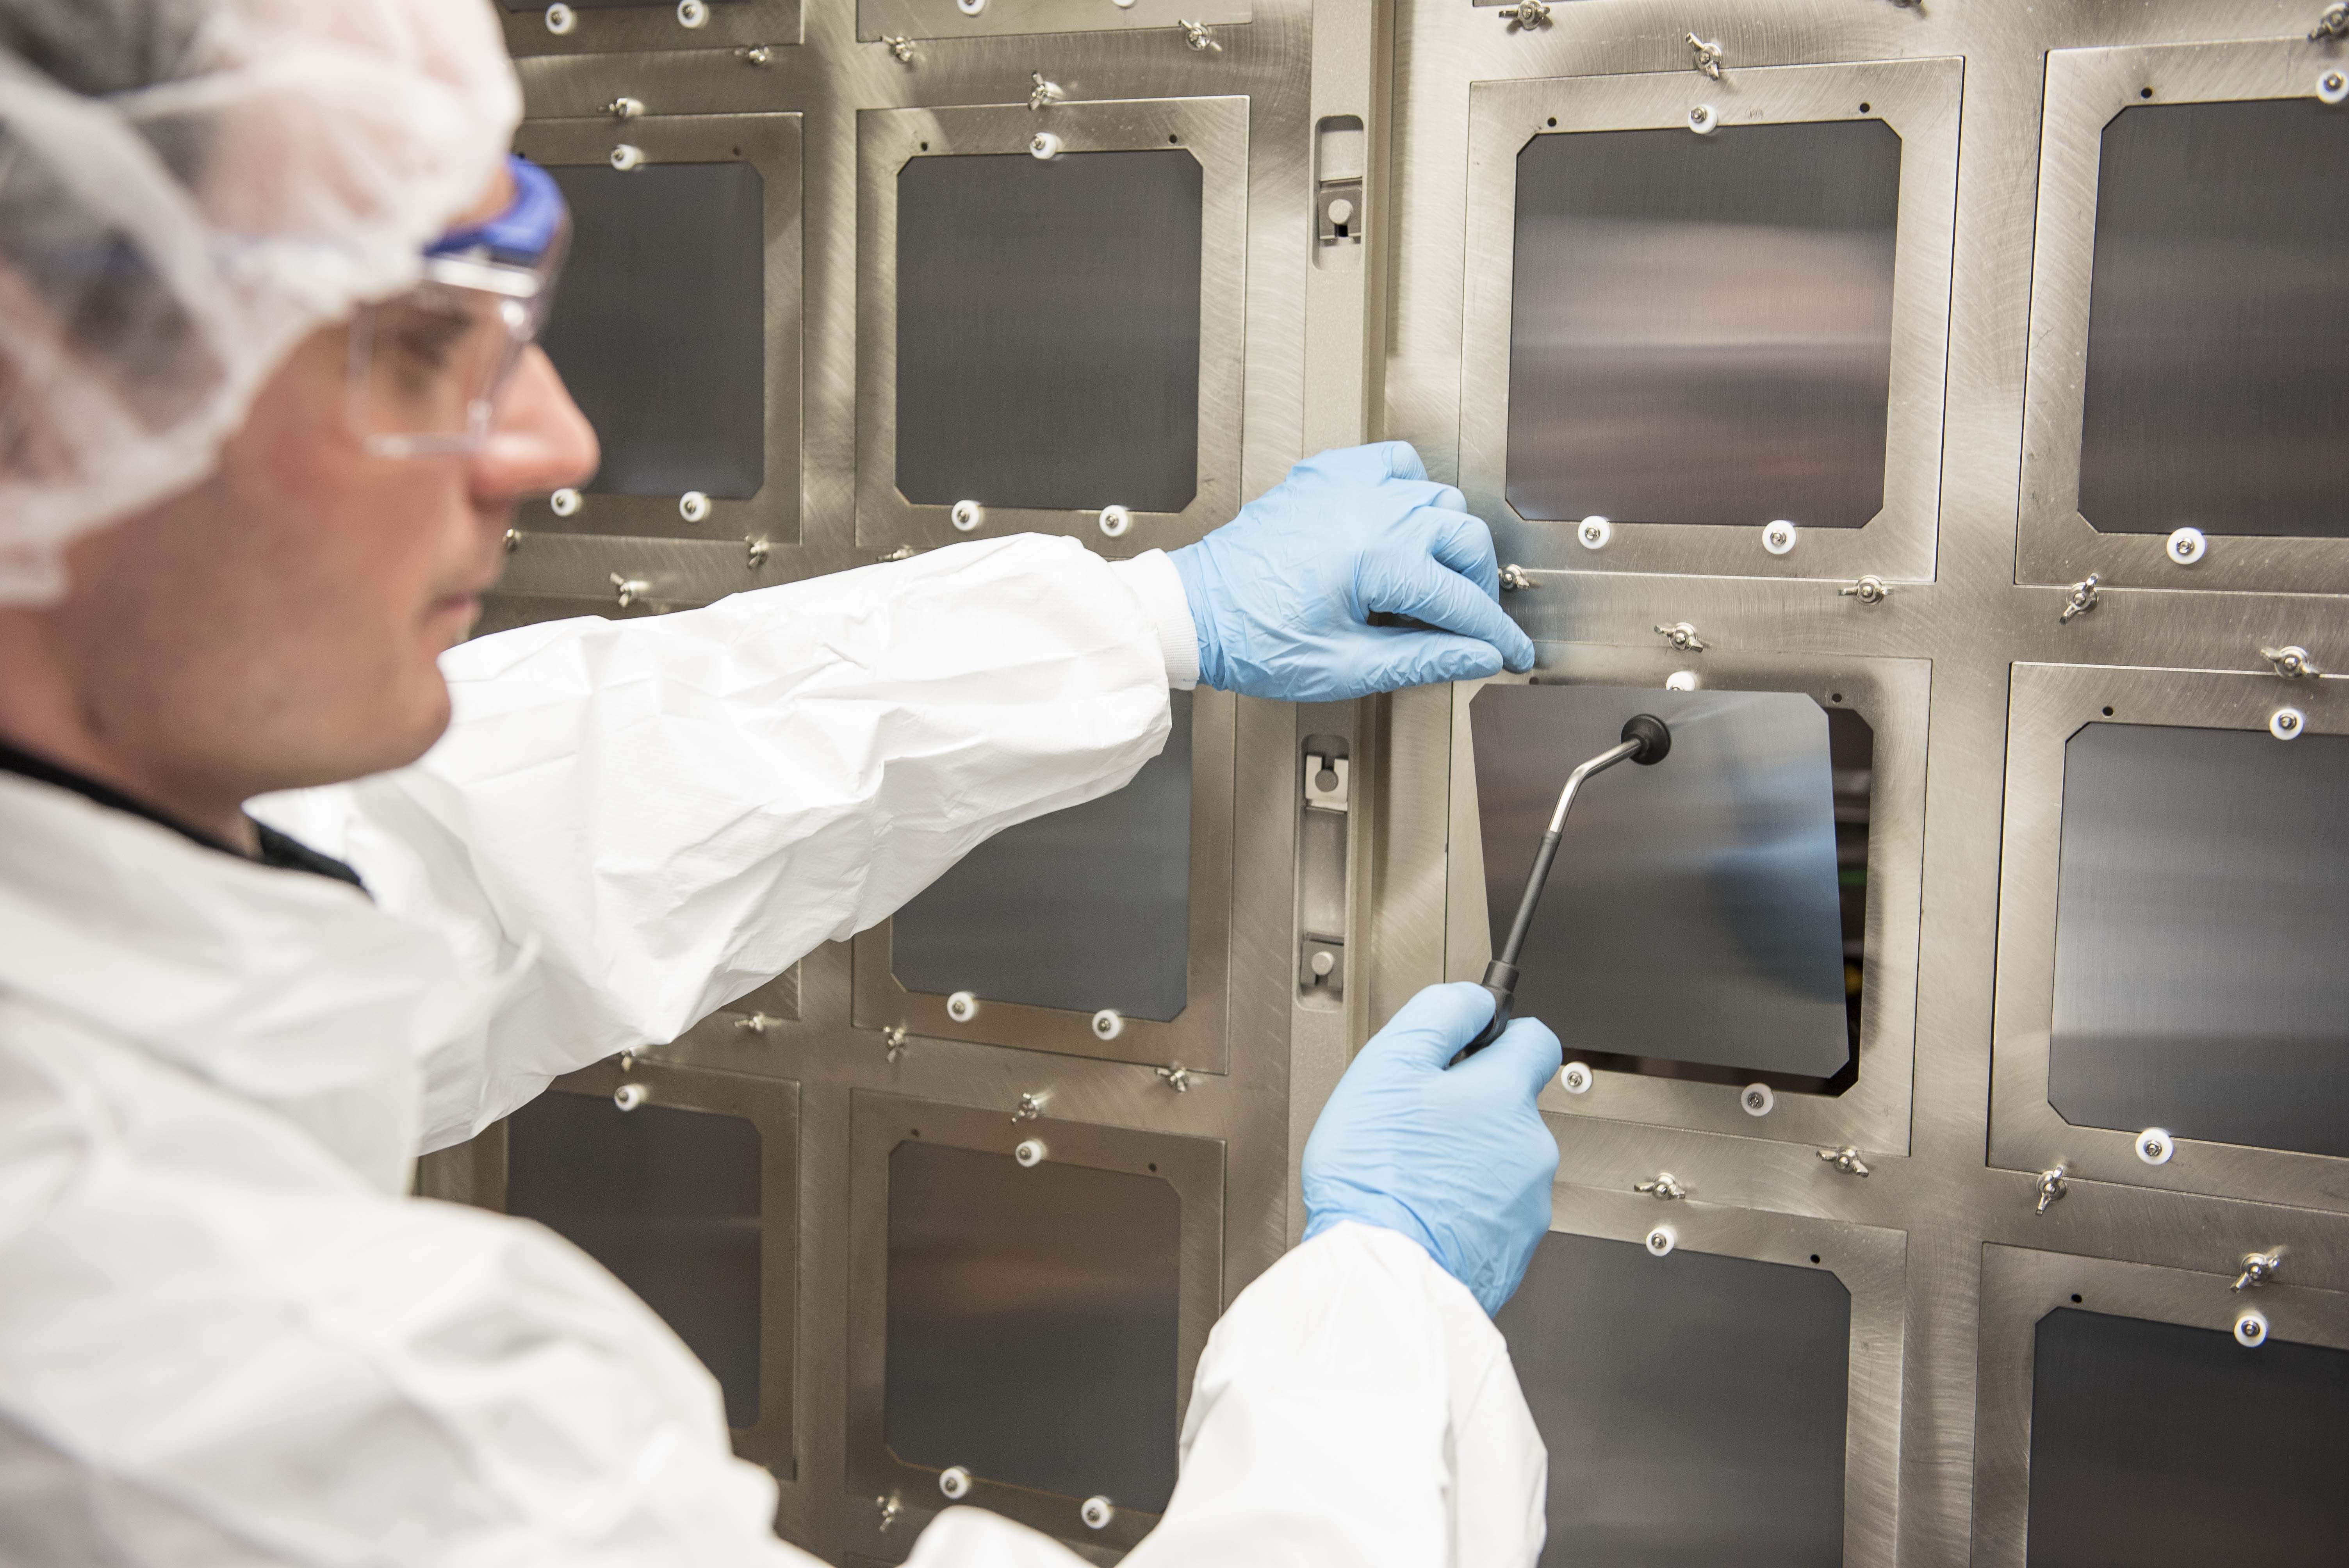 Oxford PV achieves 27.3% efficiency for perovskite solar cell